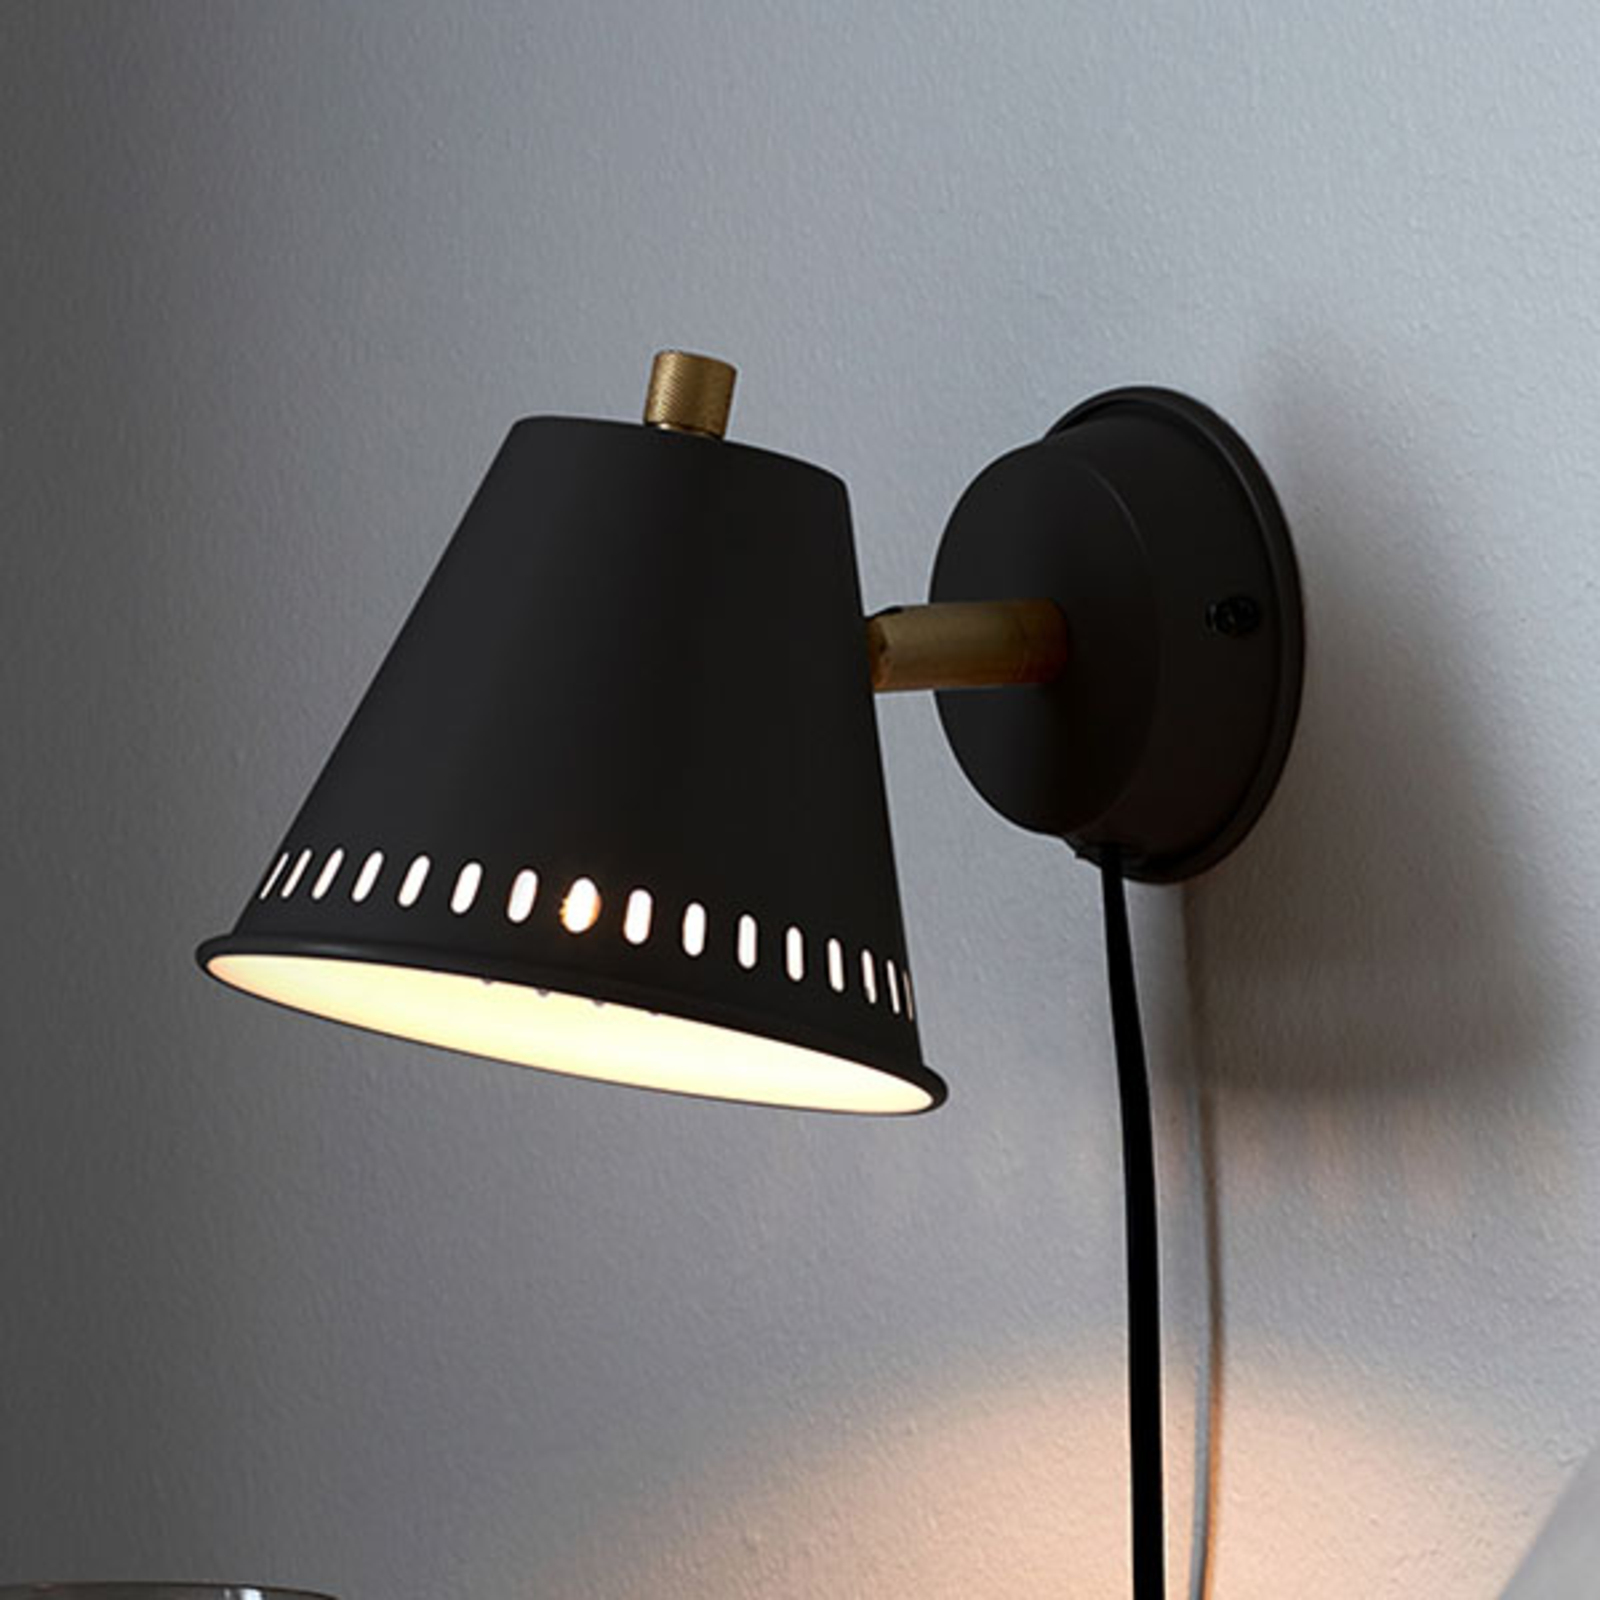 Pine wall light with a plug, black